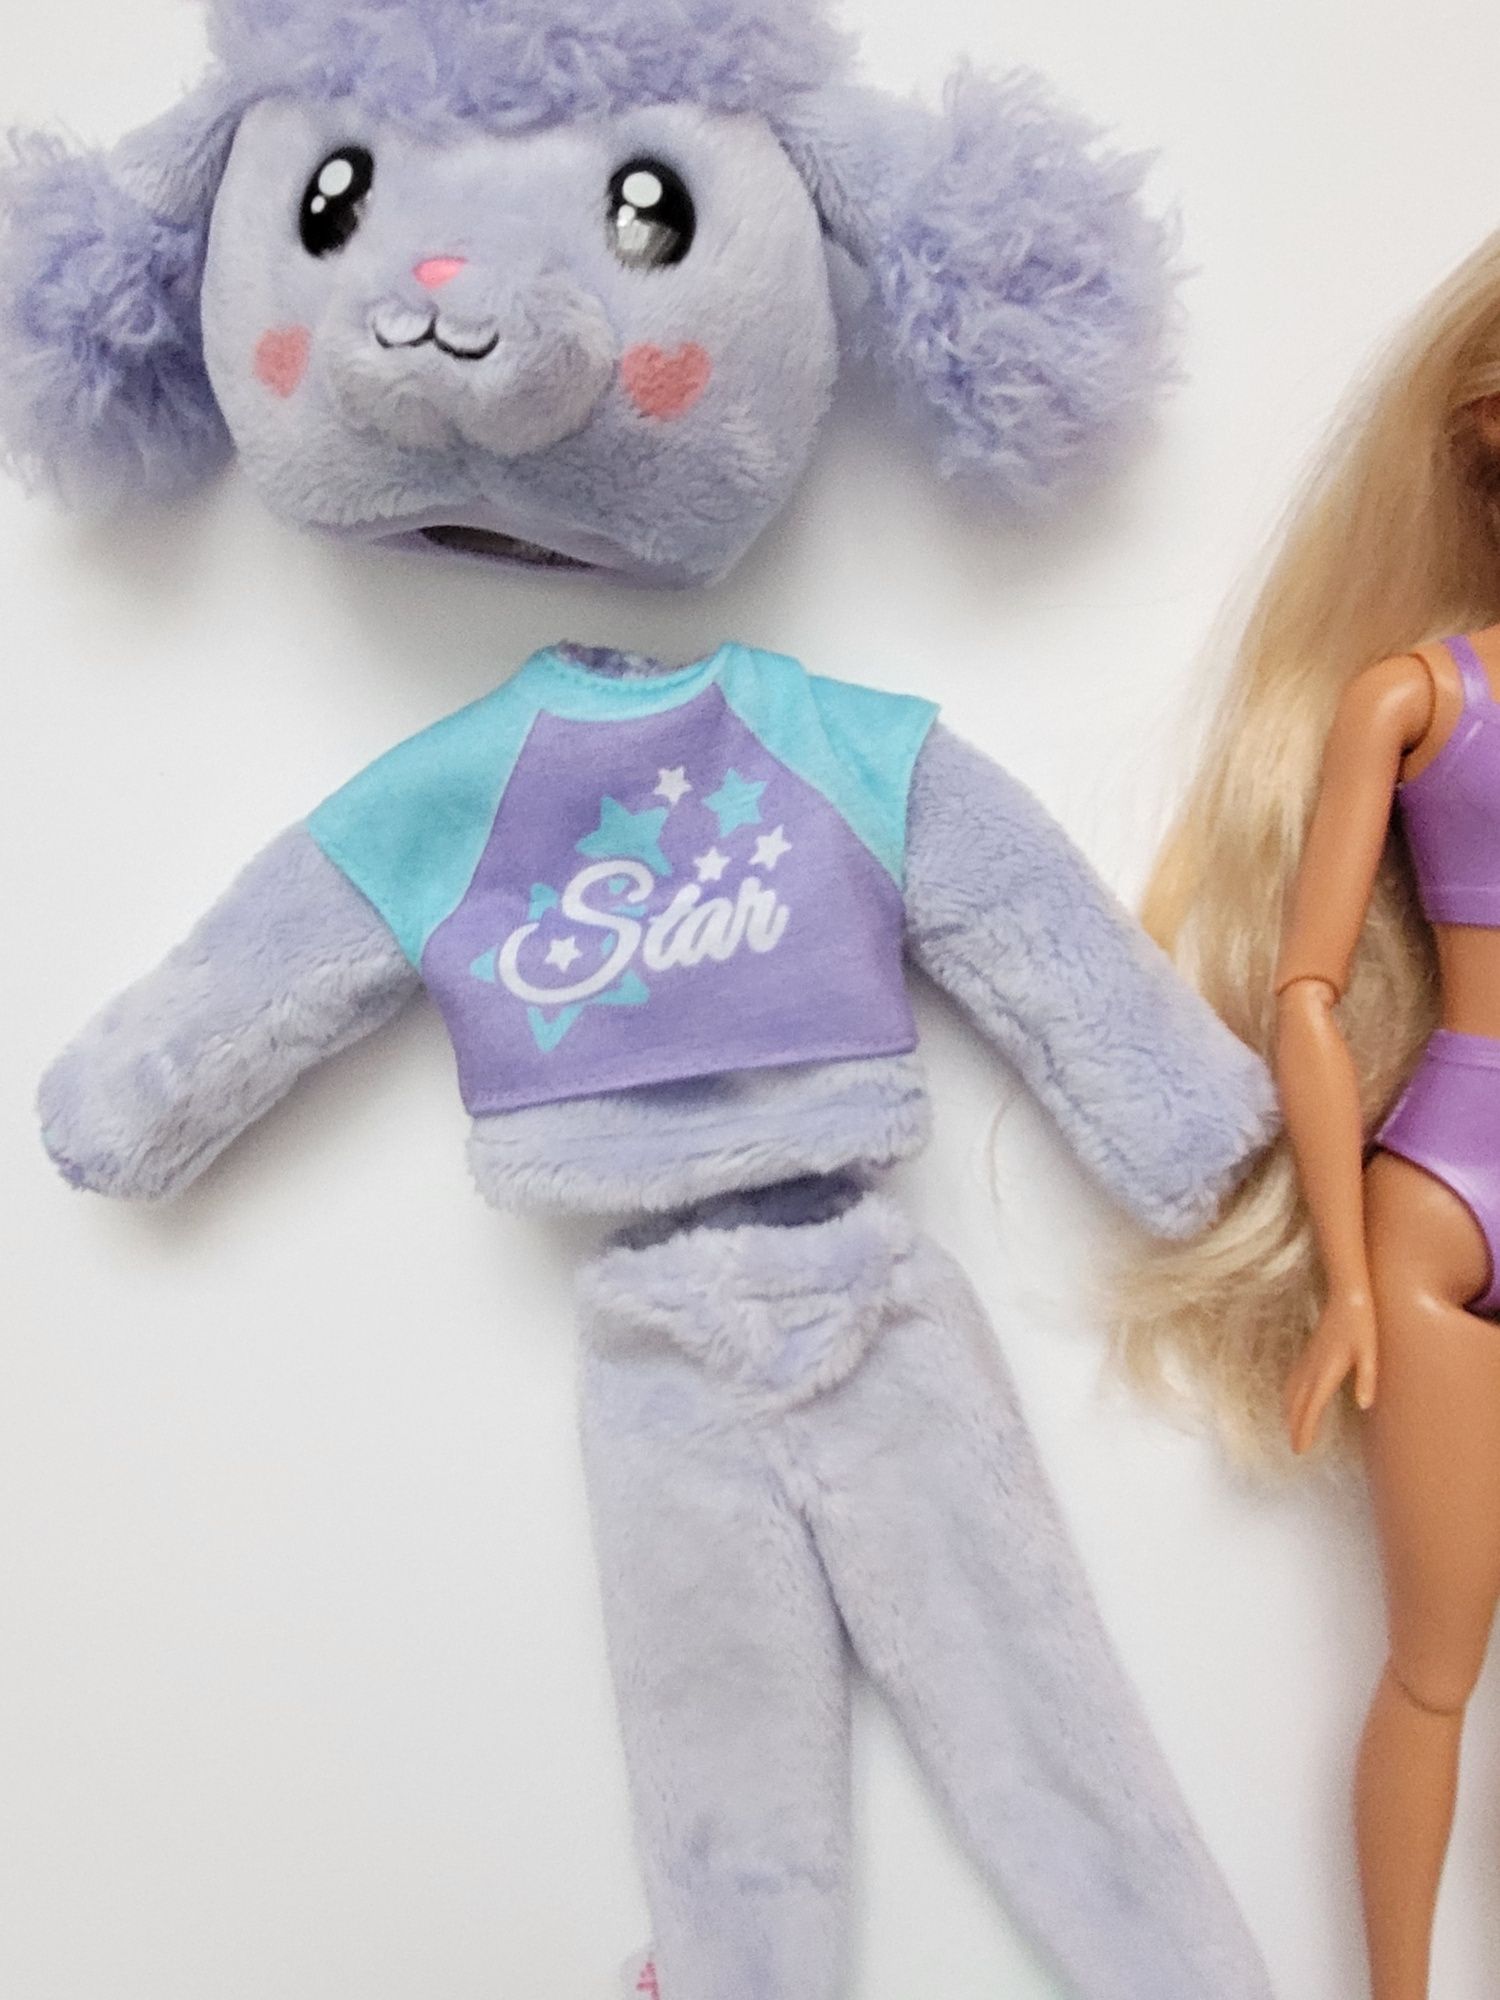 Barbie cutie reveal pudel i jednorożec